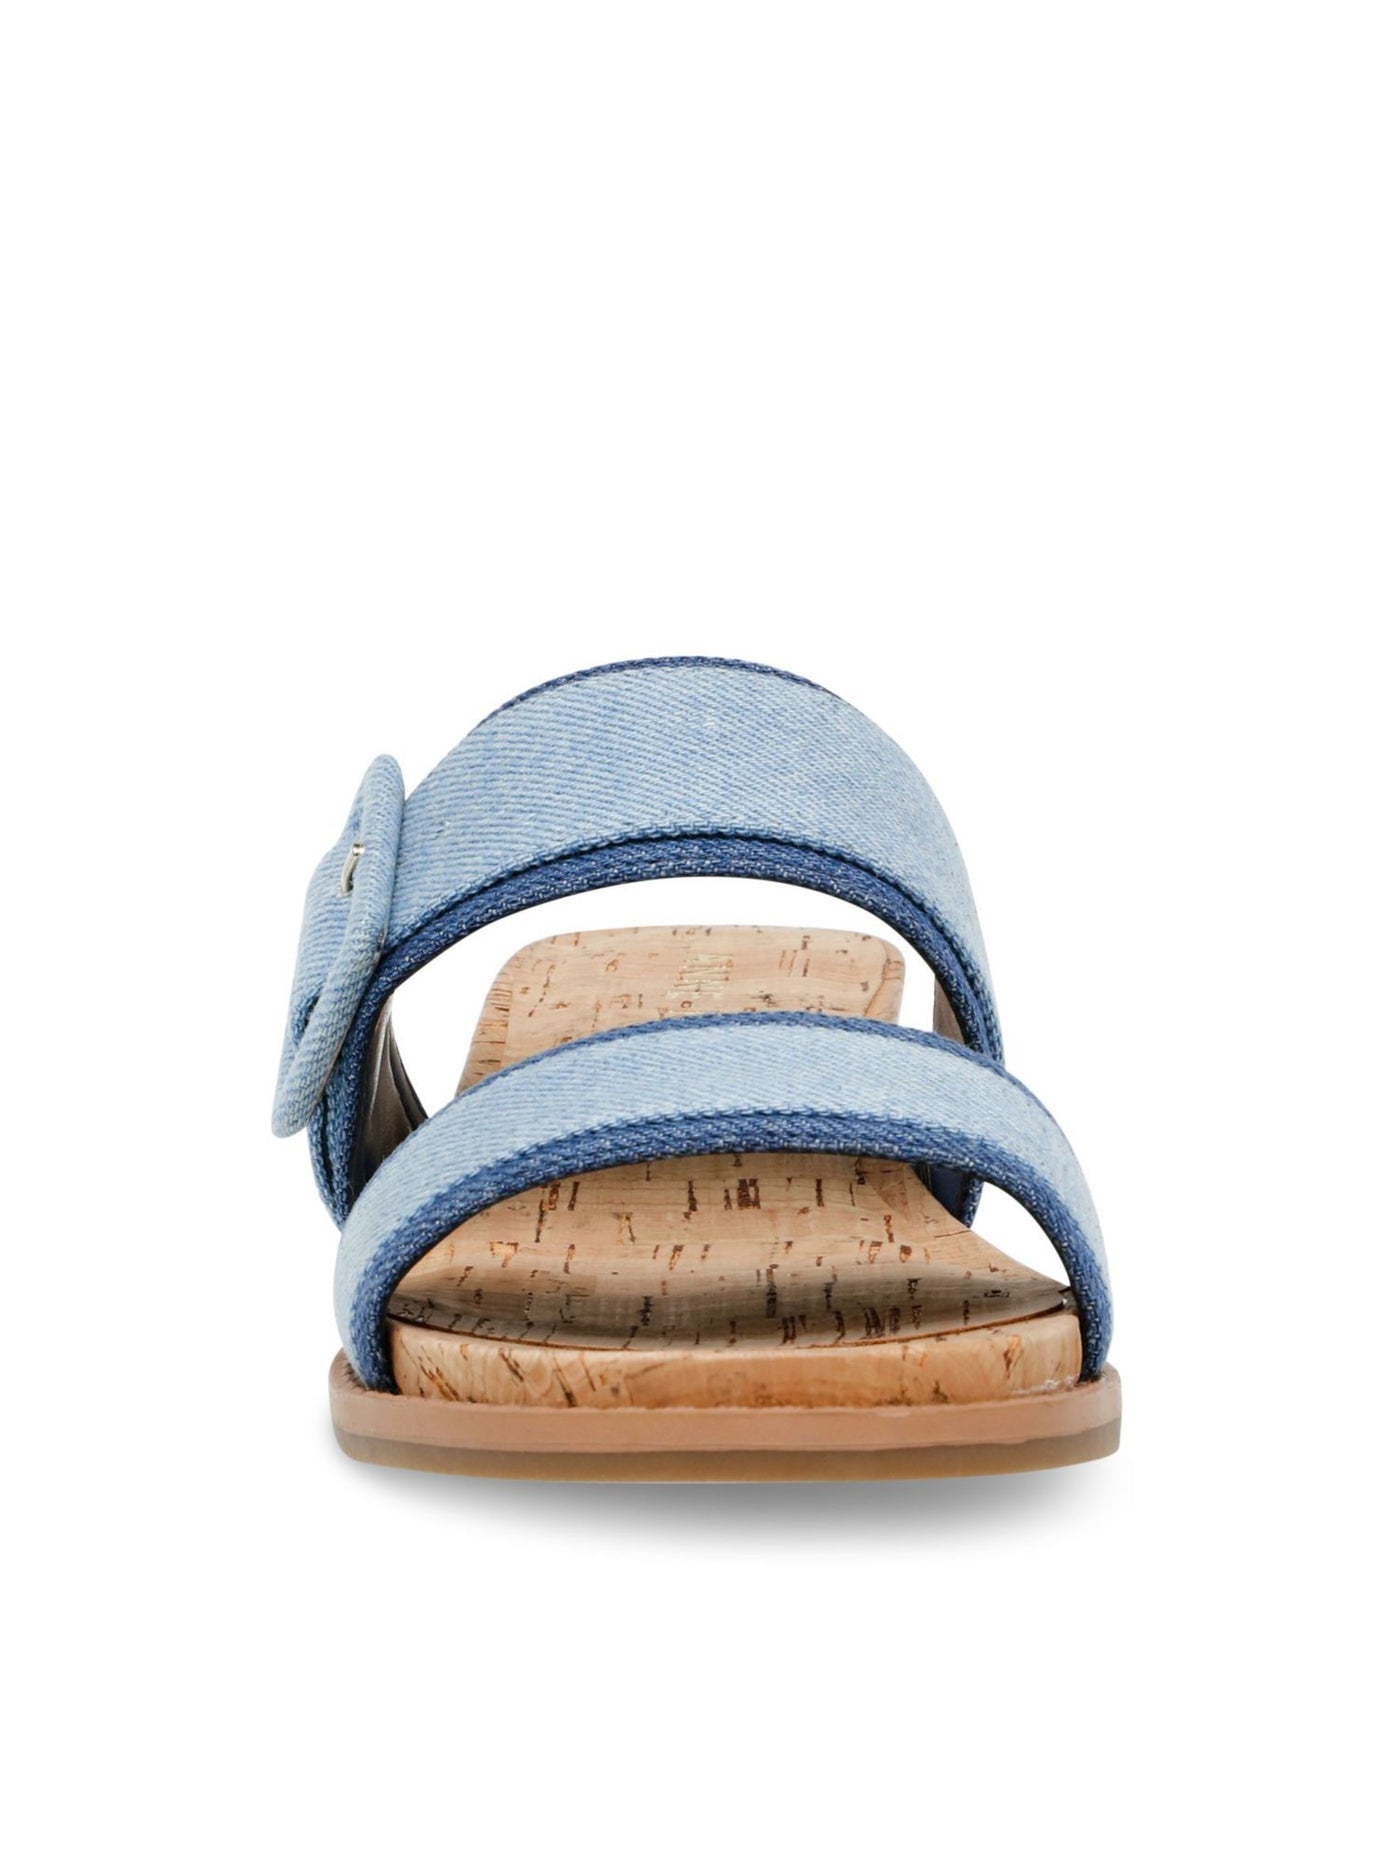 ANNE KLEIN Womens Blue Denim Buckle Accent Cushioned Brenda Round Toe Wedge Slip On Sandals Shoes 7 M